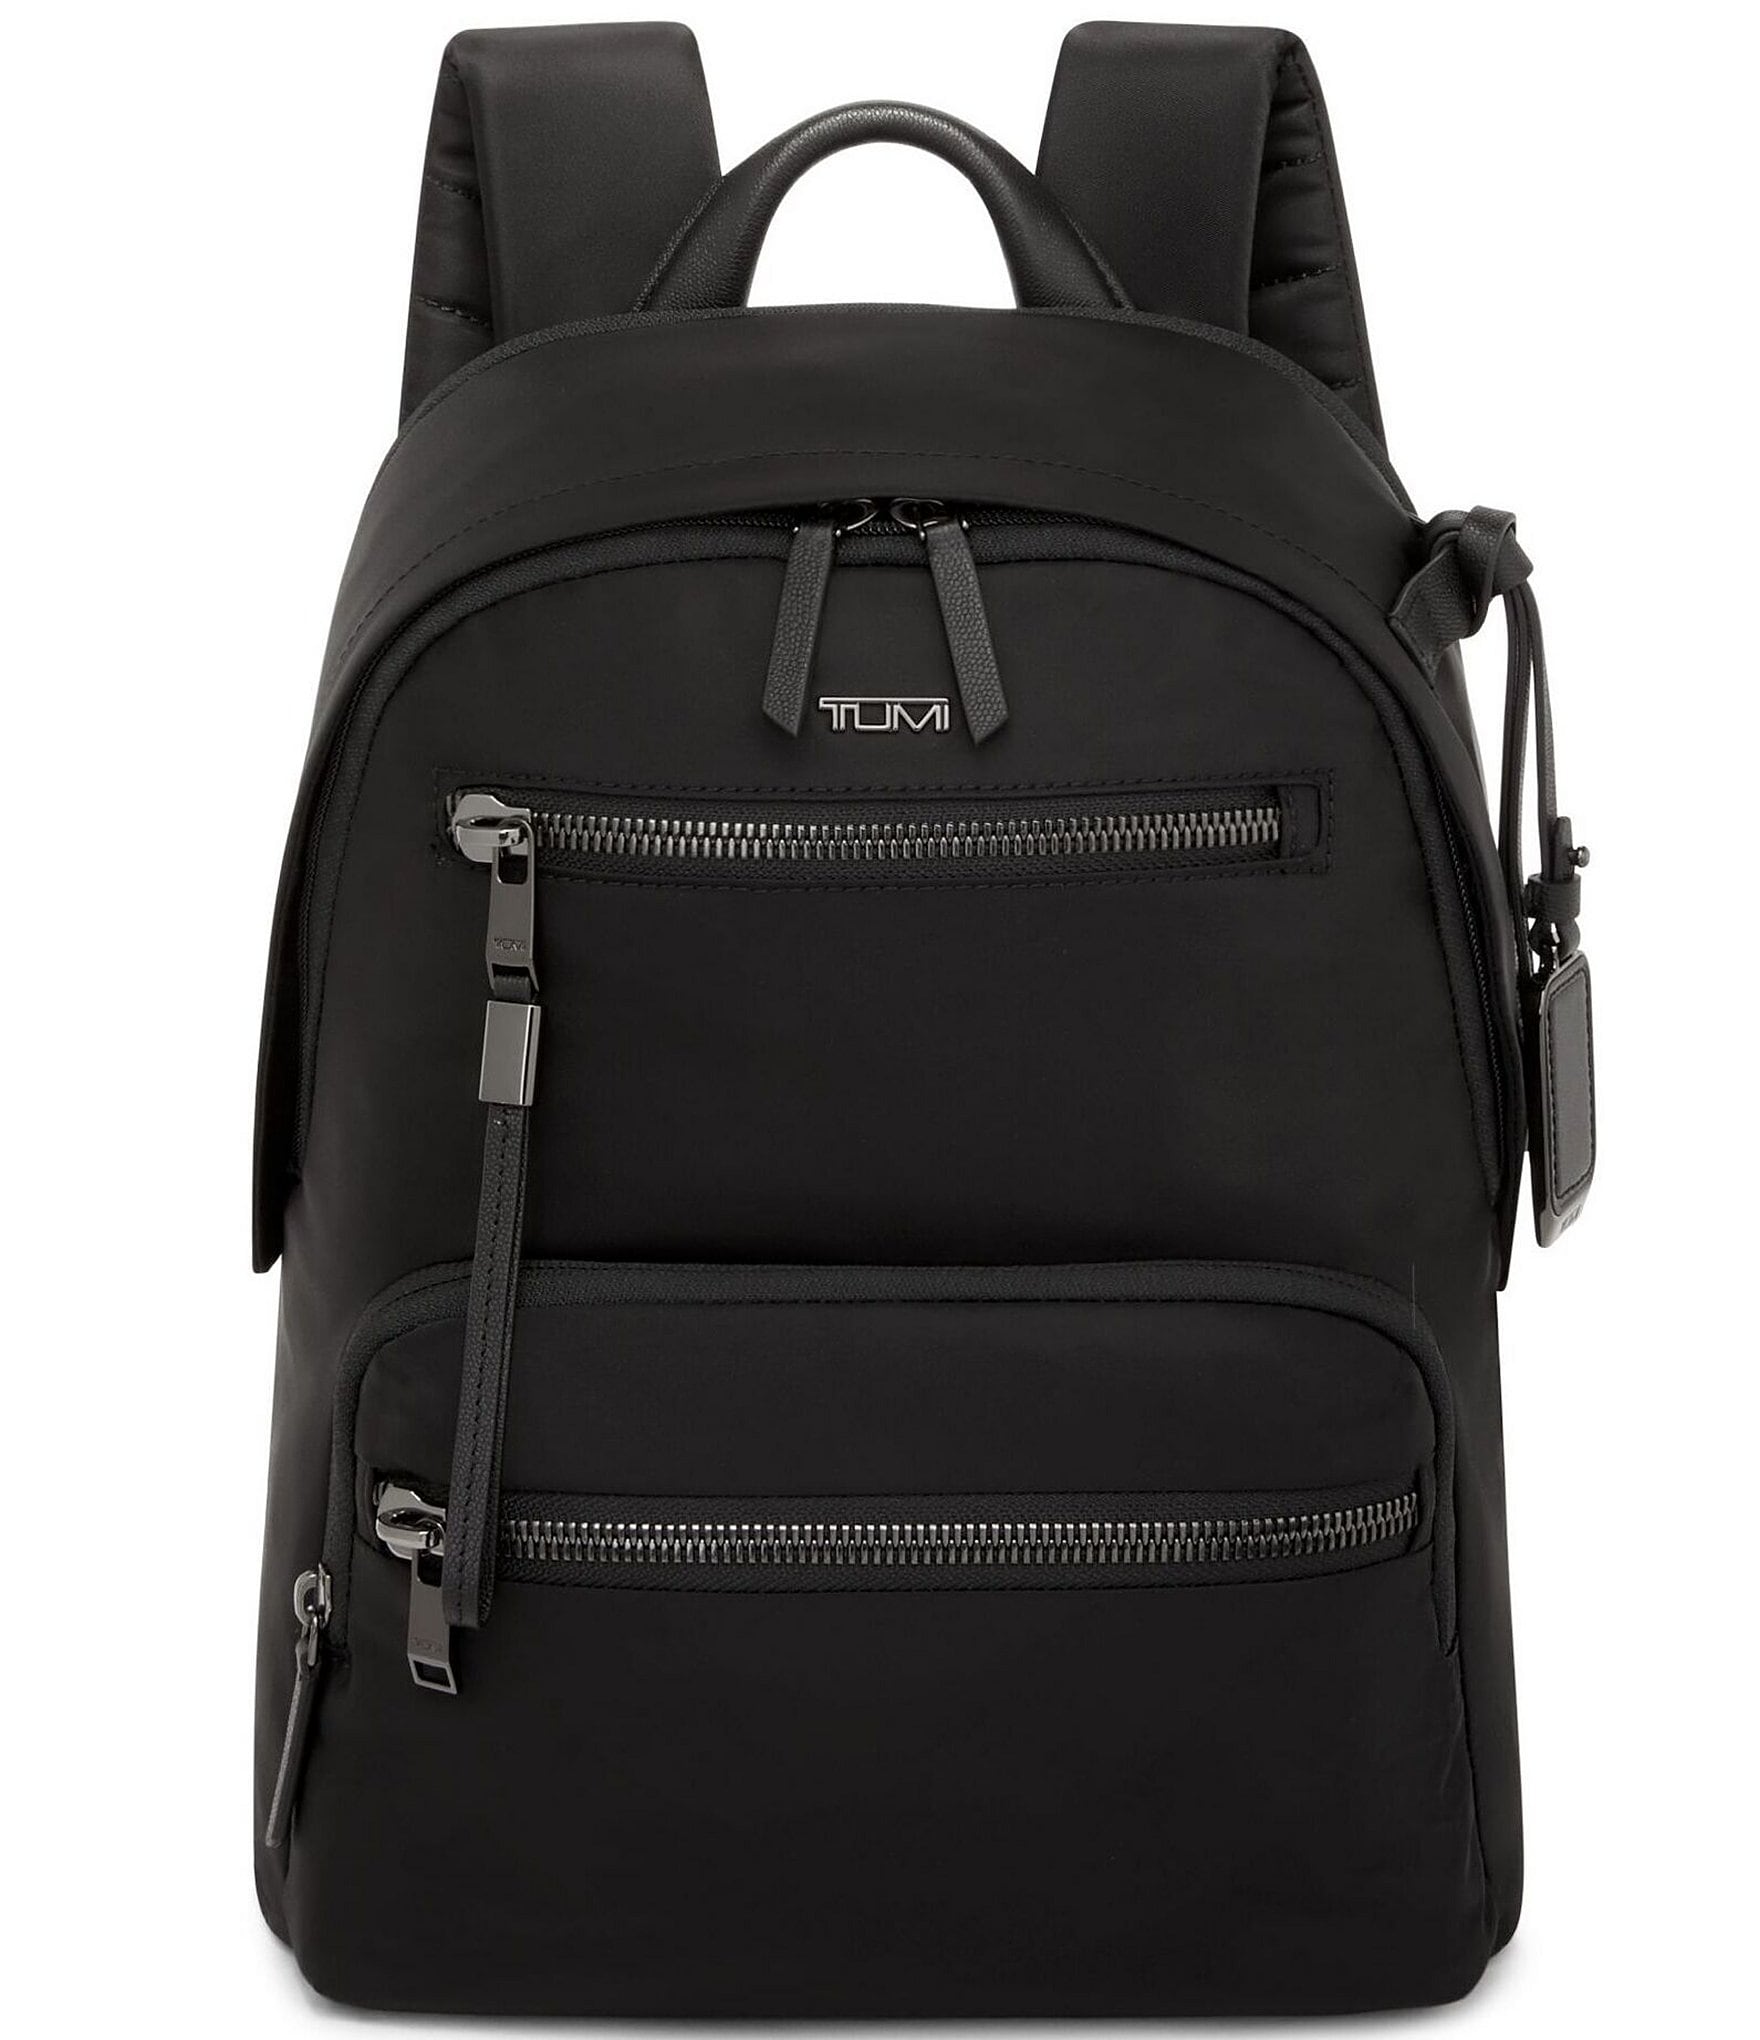 Stylish and Durable Tumi Black Travel Backpack